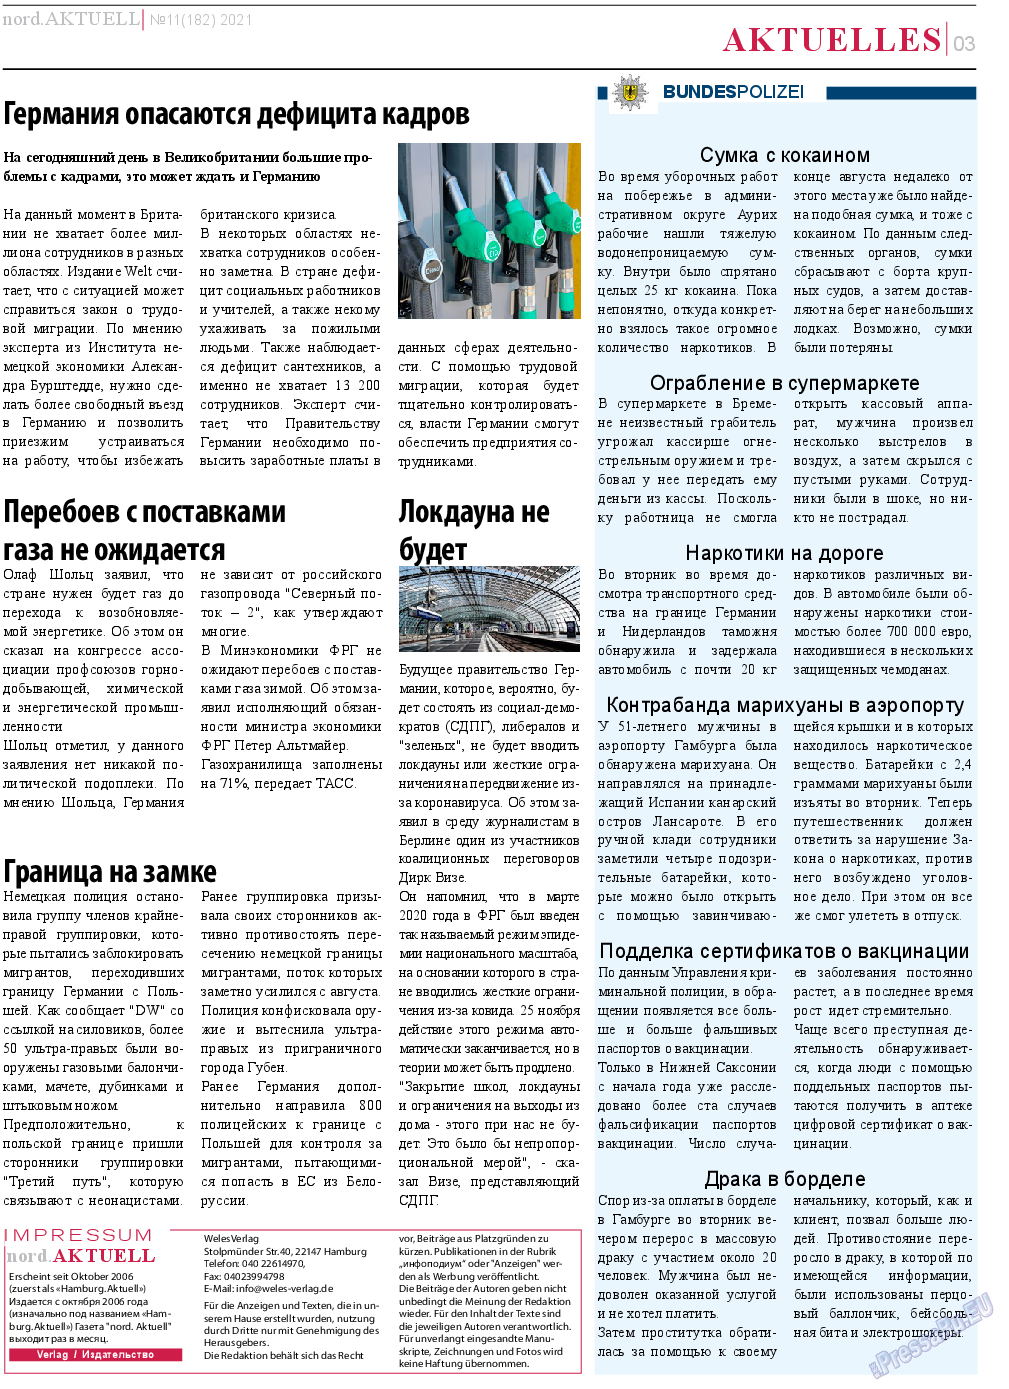 nord.Aktuell, газета. 2021 №11 стр.3